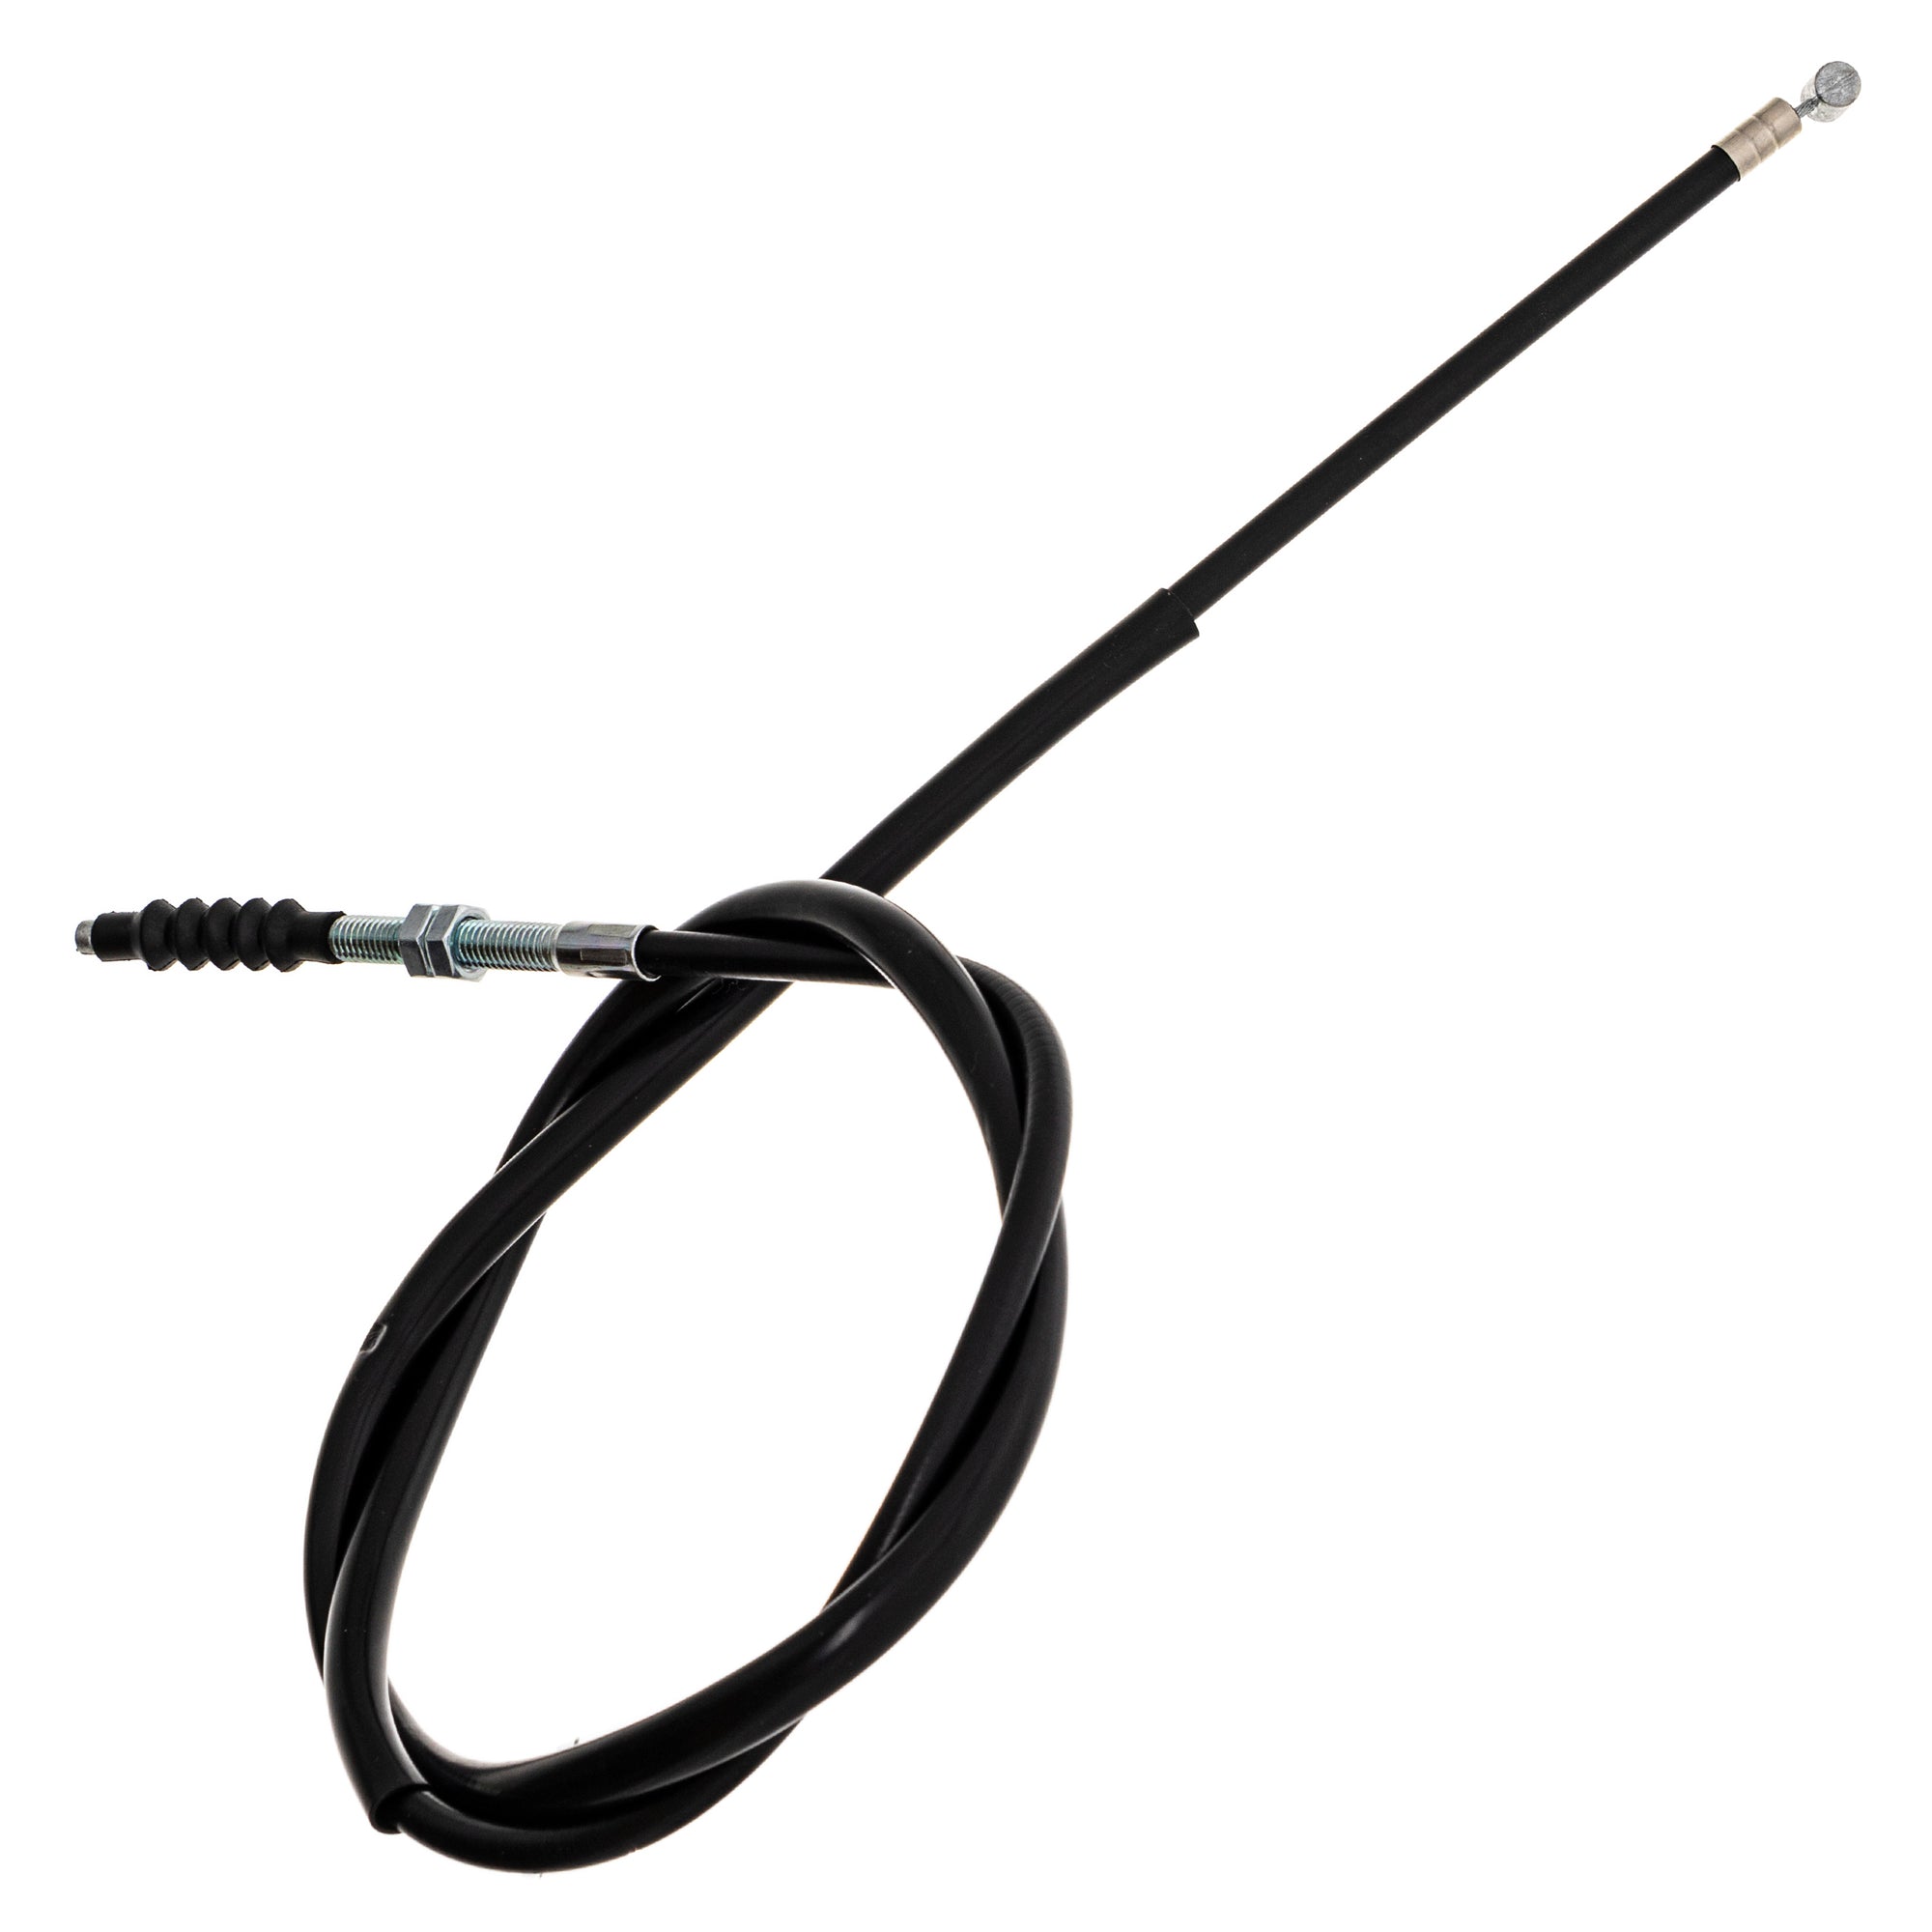 Clutch Cable for Honda CMX450 XL250 XL350 XR250 XR500 22870-435-610